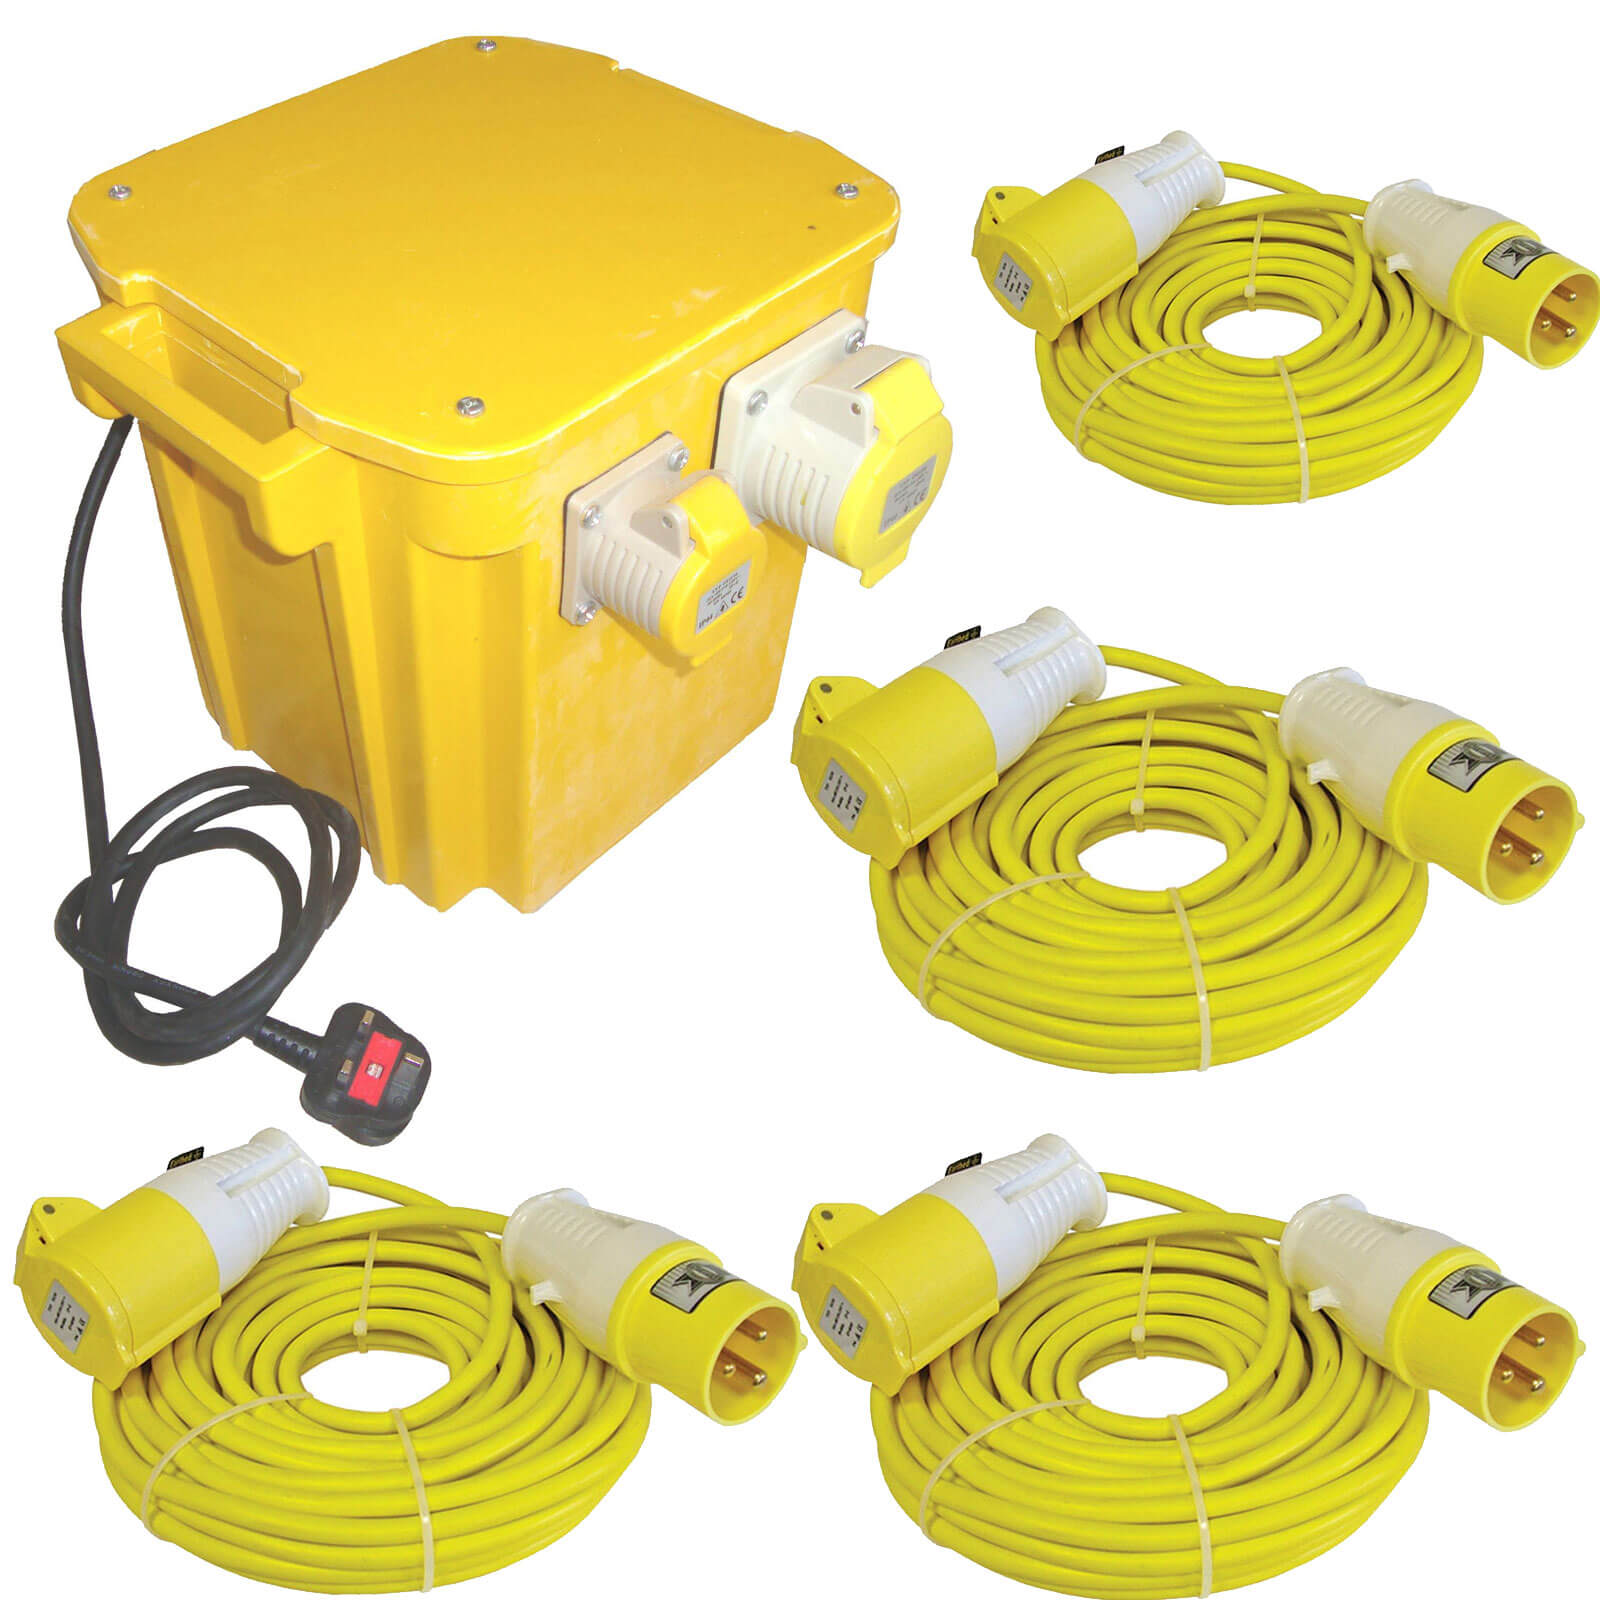 Sirius Professional 5kva 110v Site Power Supply Kit